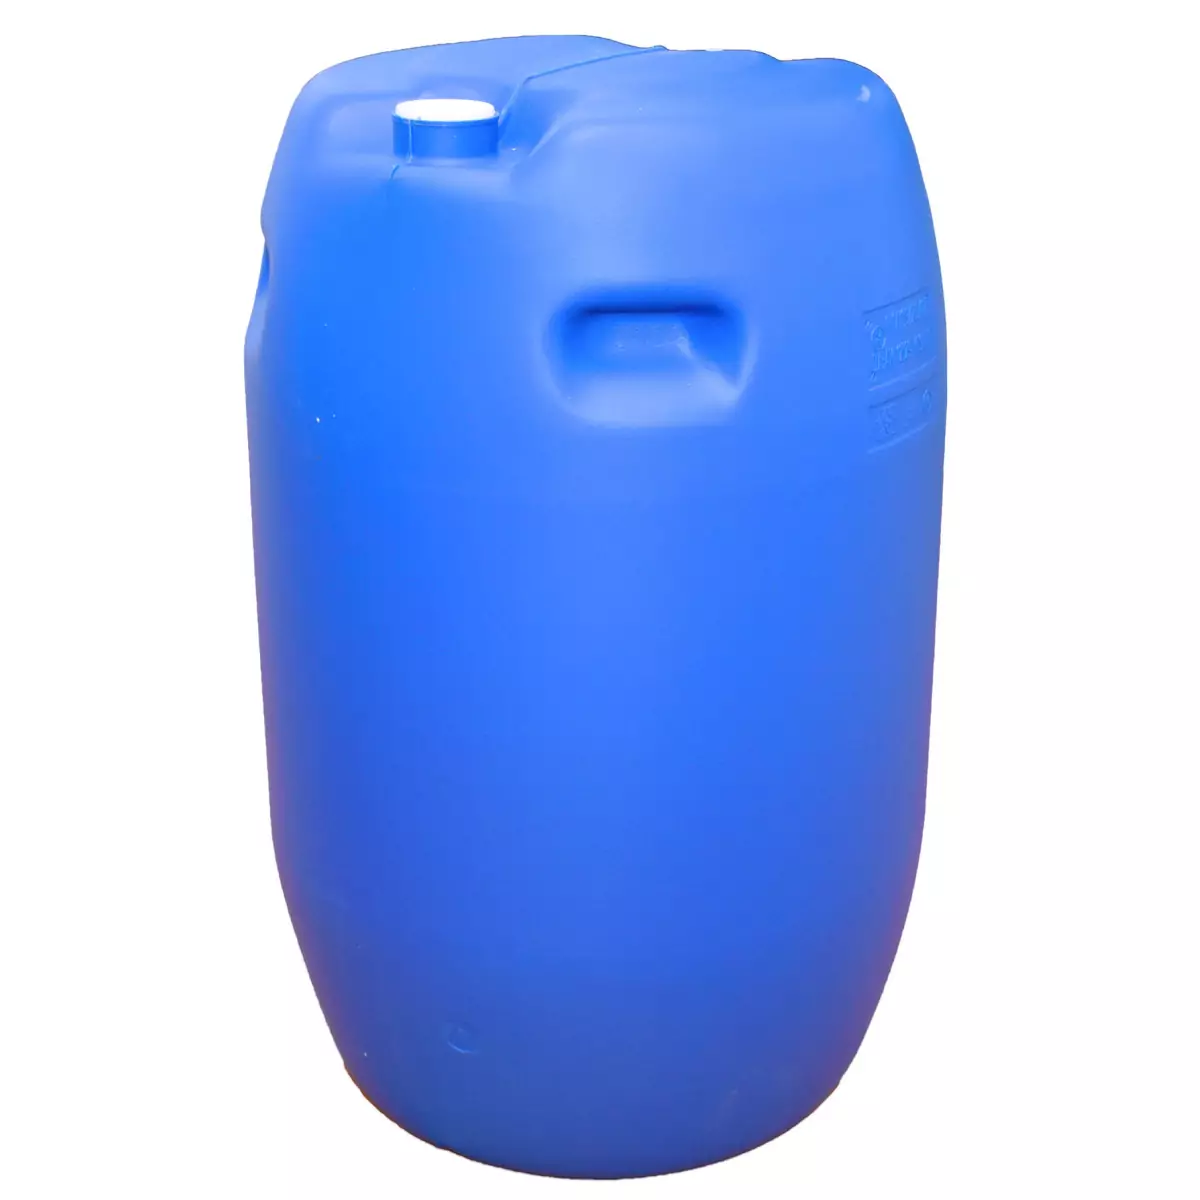 Réservoir fût plastique bleu PEHD 120L - Culture Indoor